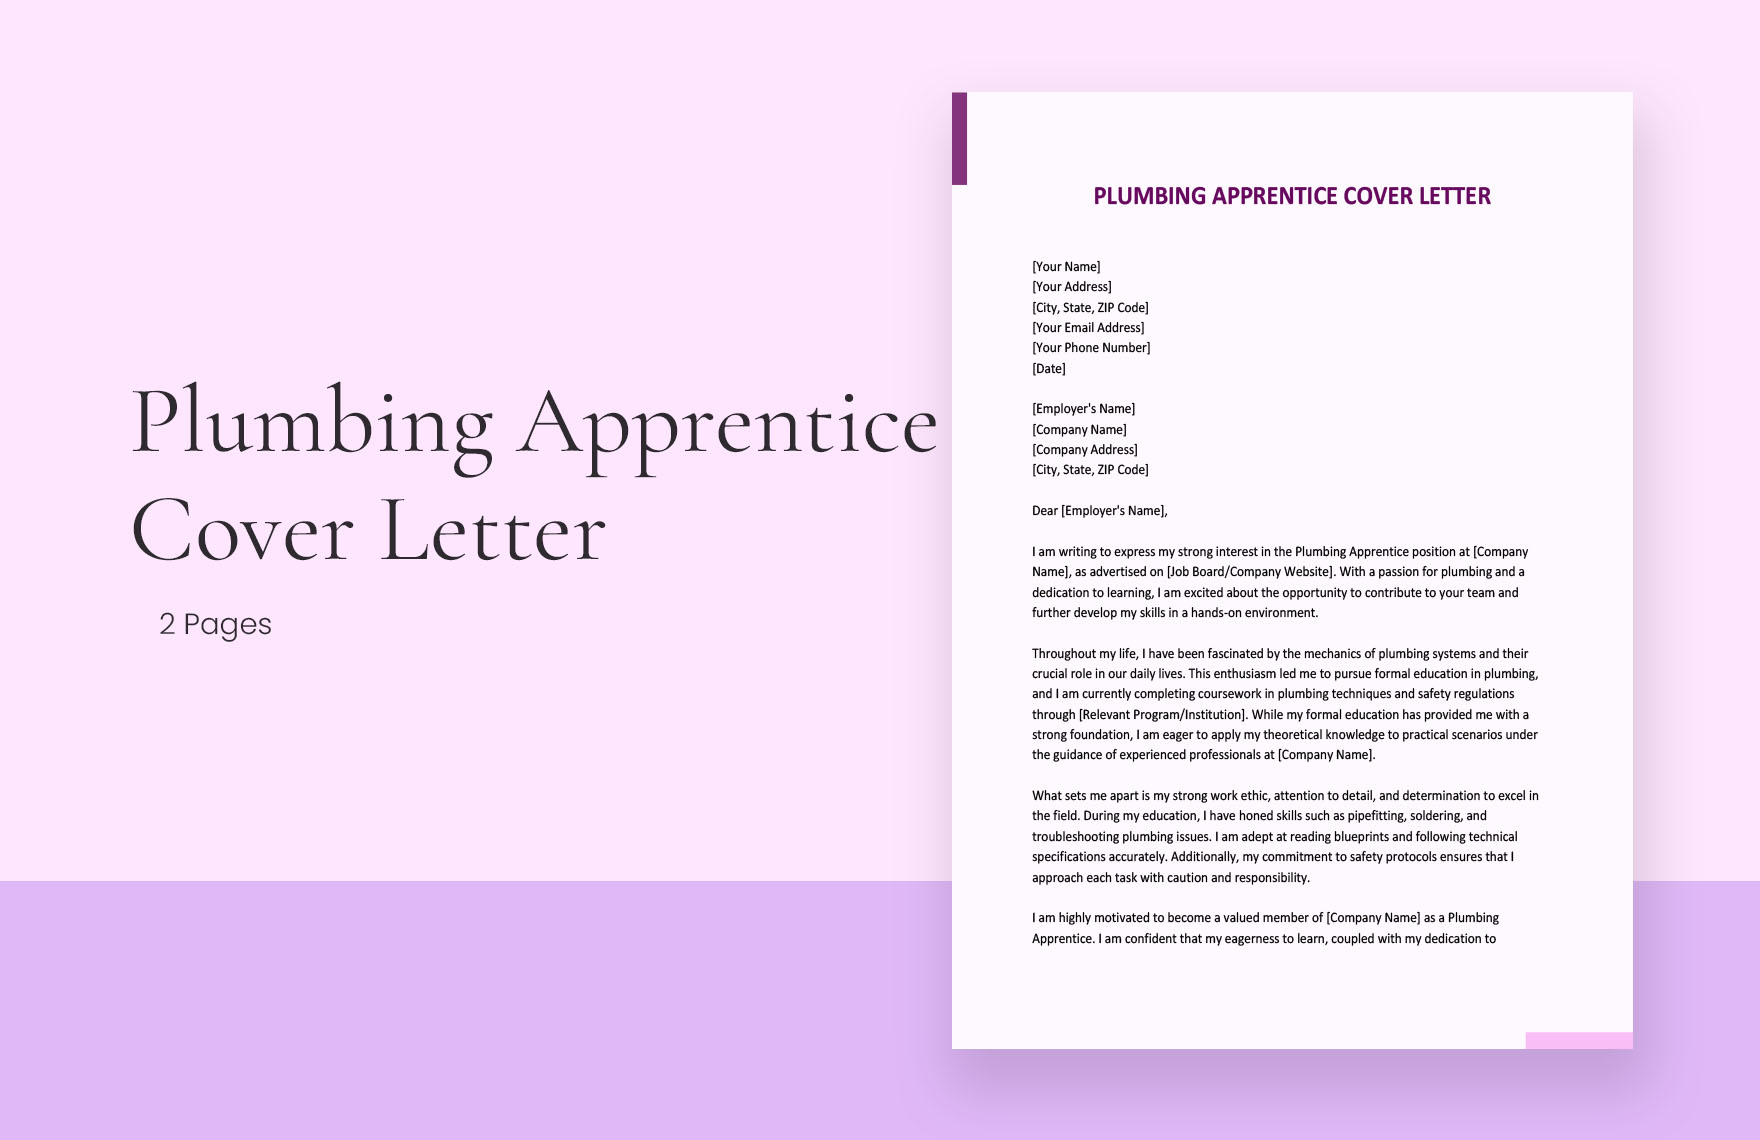 Plumbing Apprentice Cover Letter in Word, Google Docs